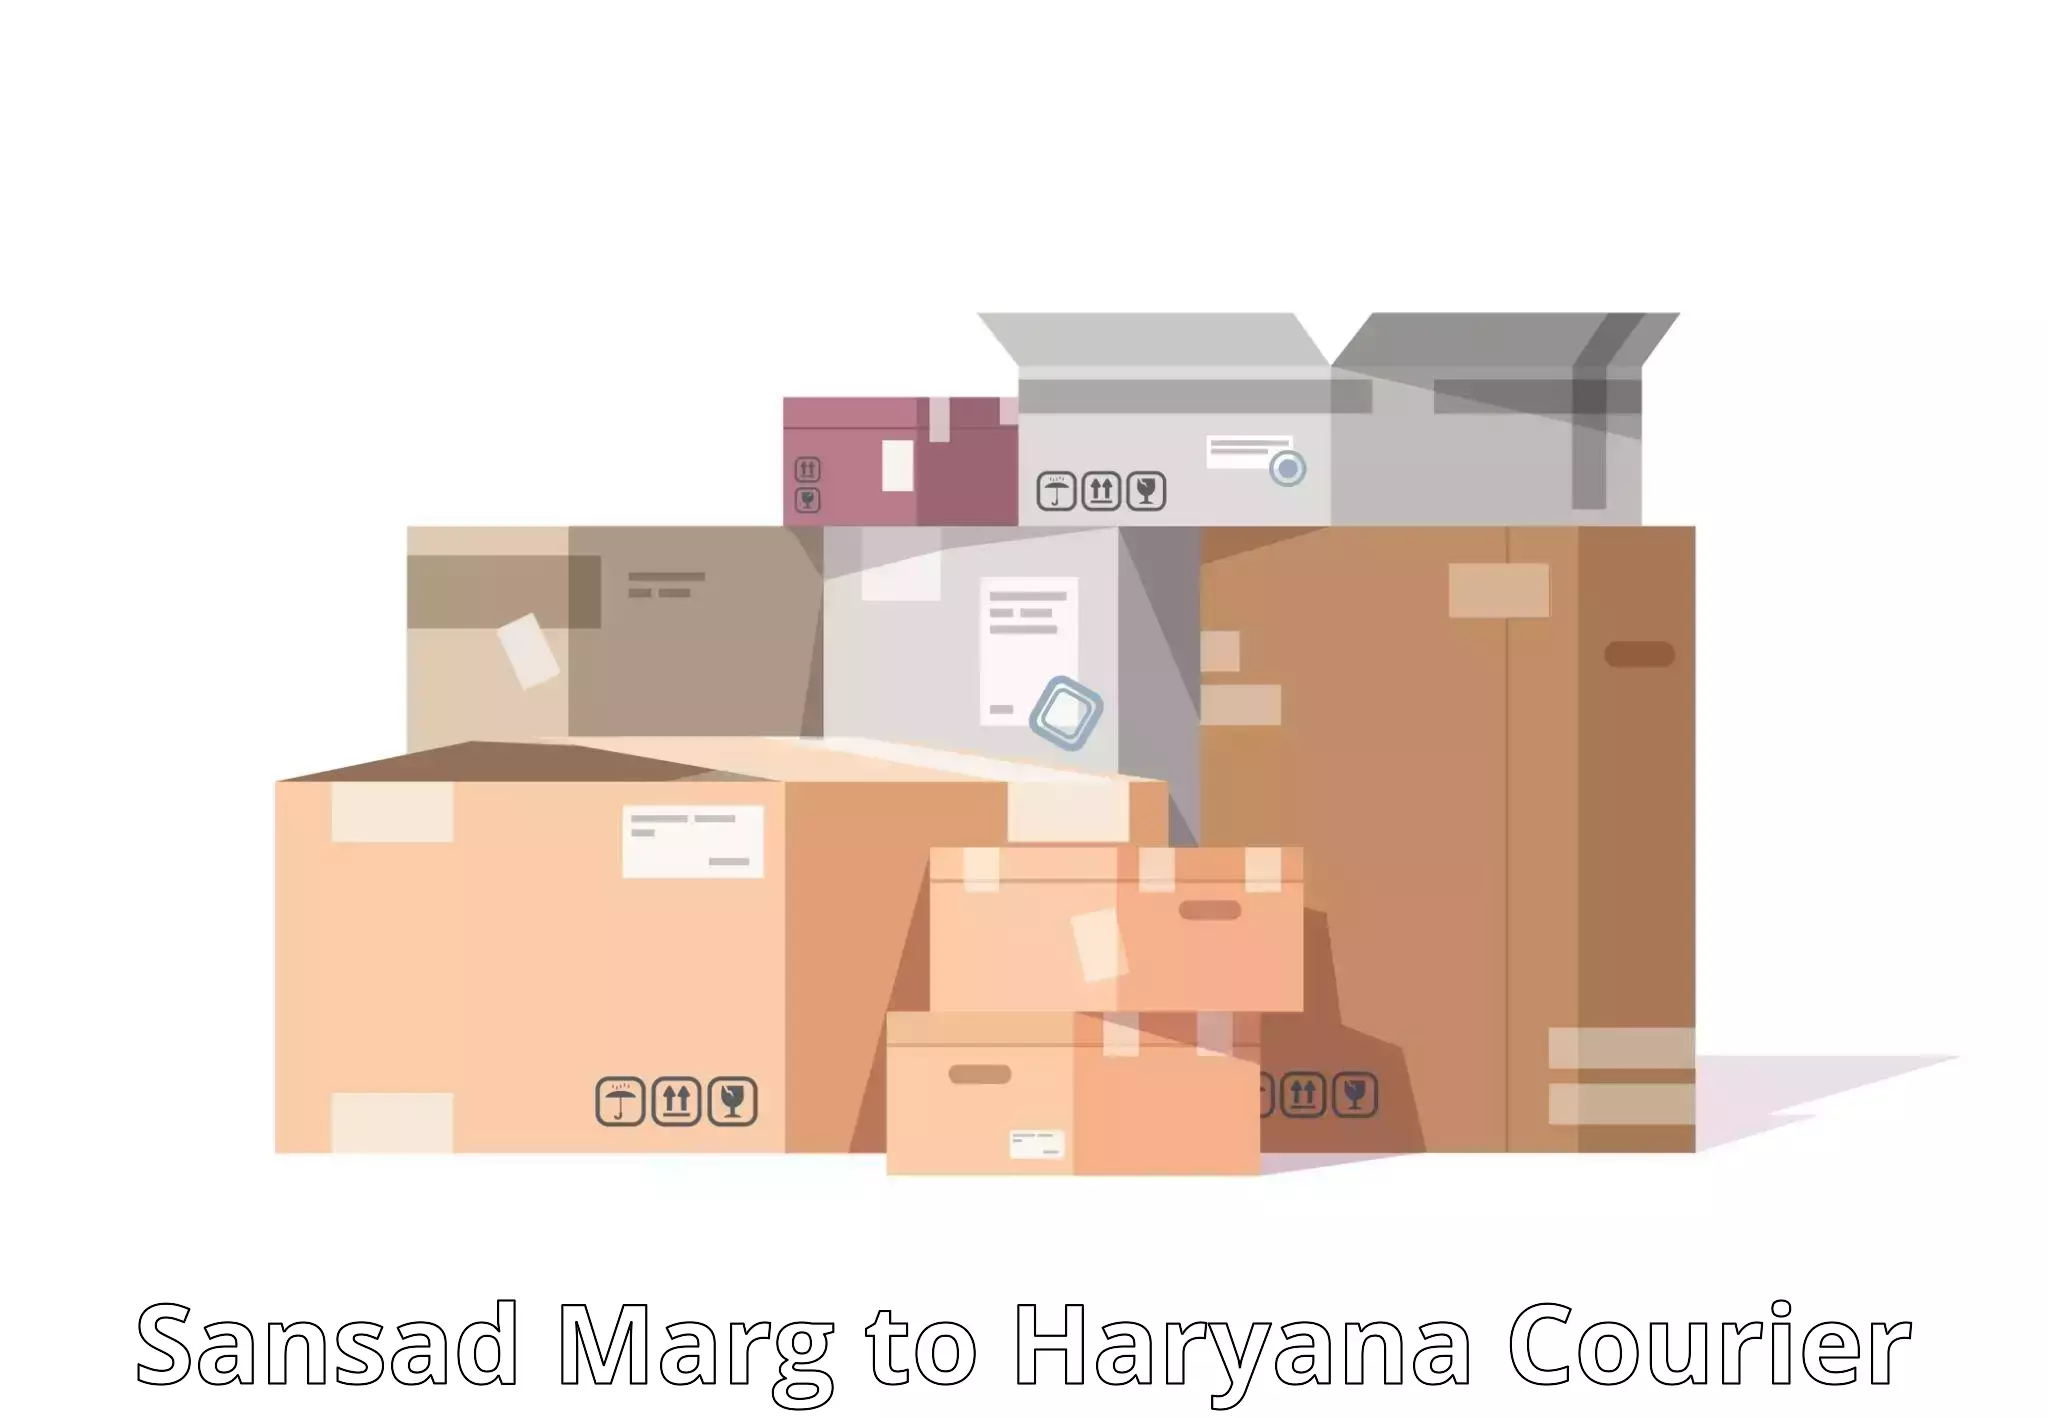 Courier service innovation Sansad Marg to Gurgaon